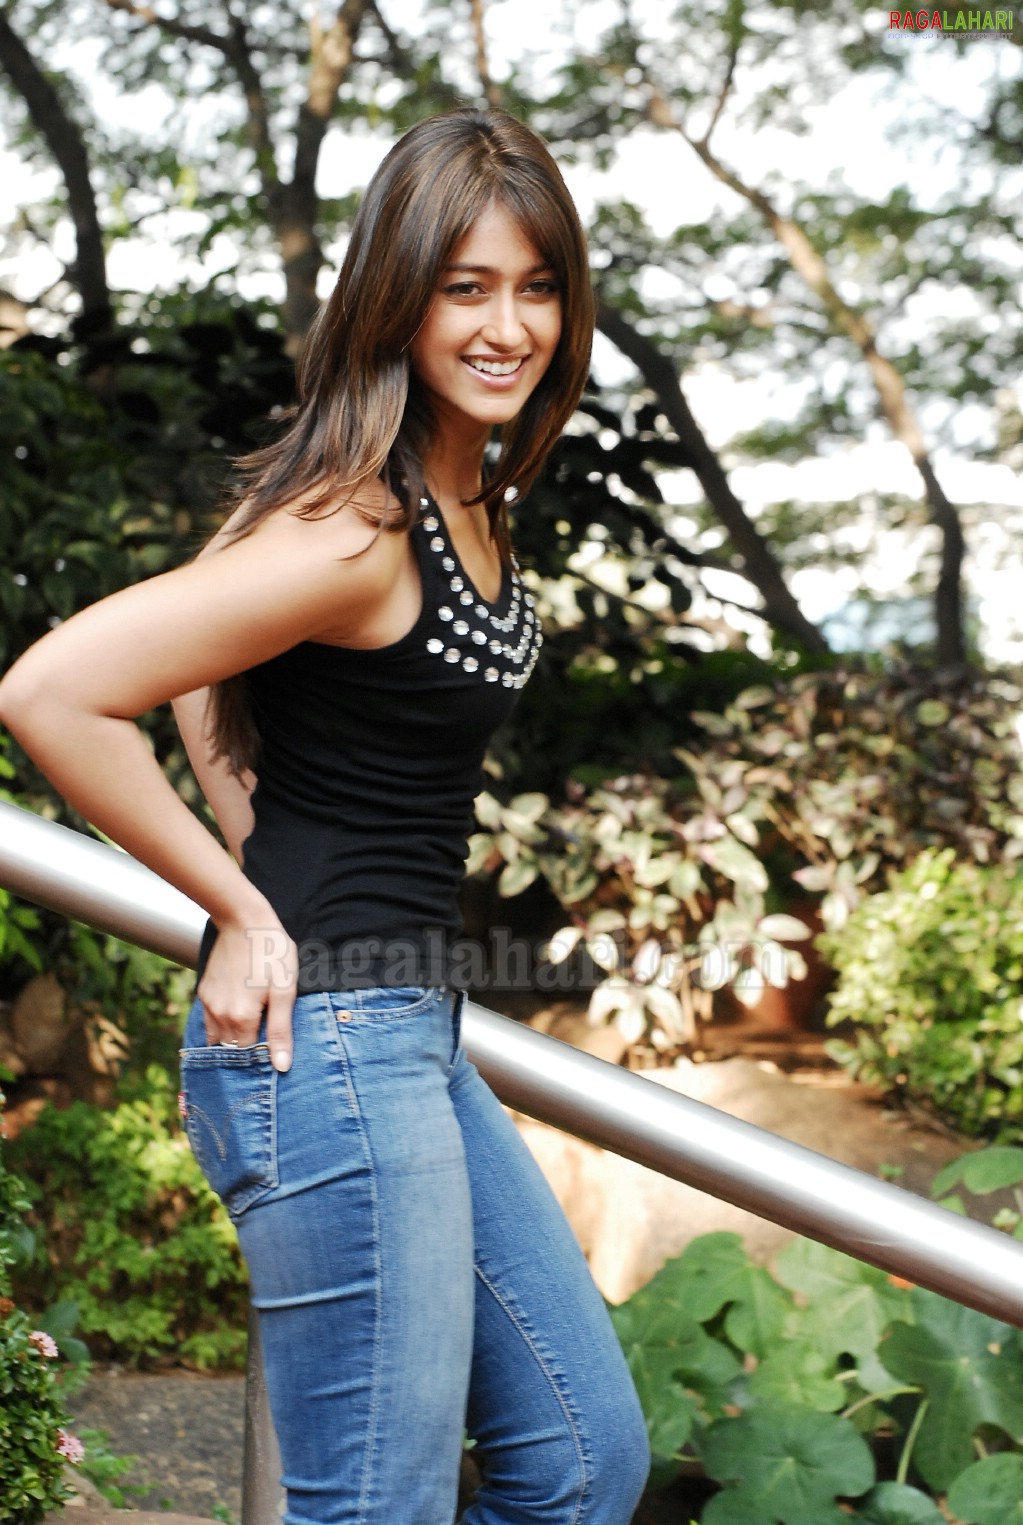 Ileana D'Cruz Photos in Tight Jeans